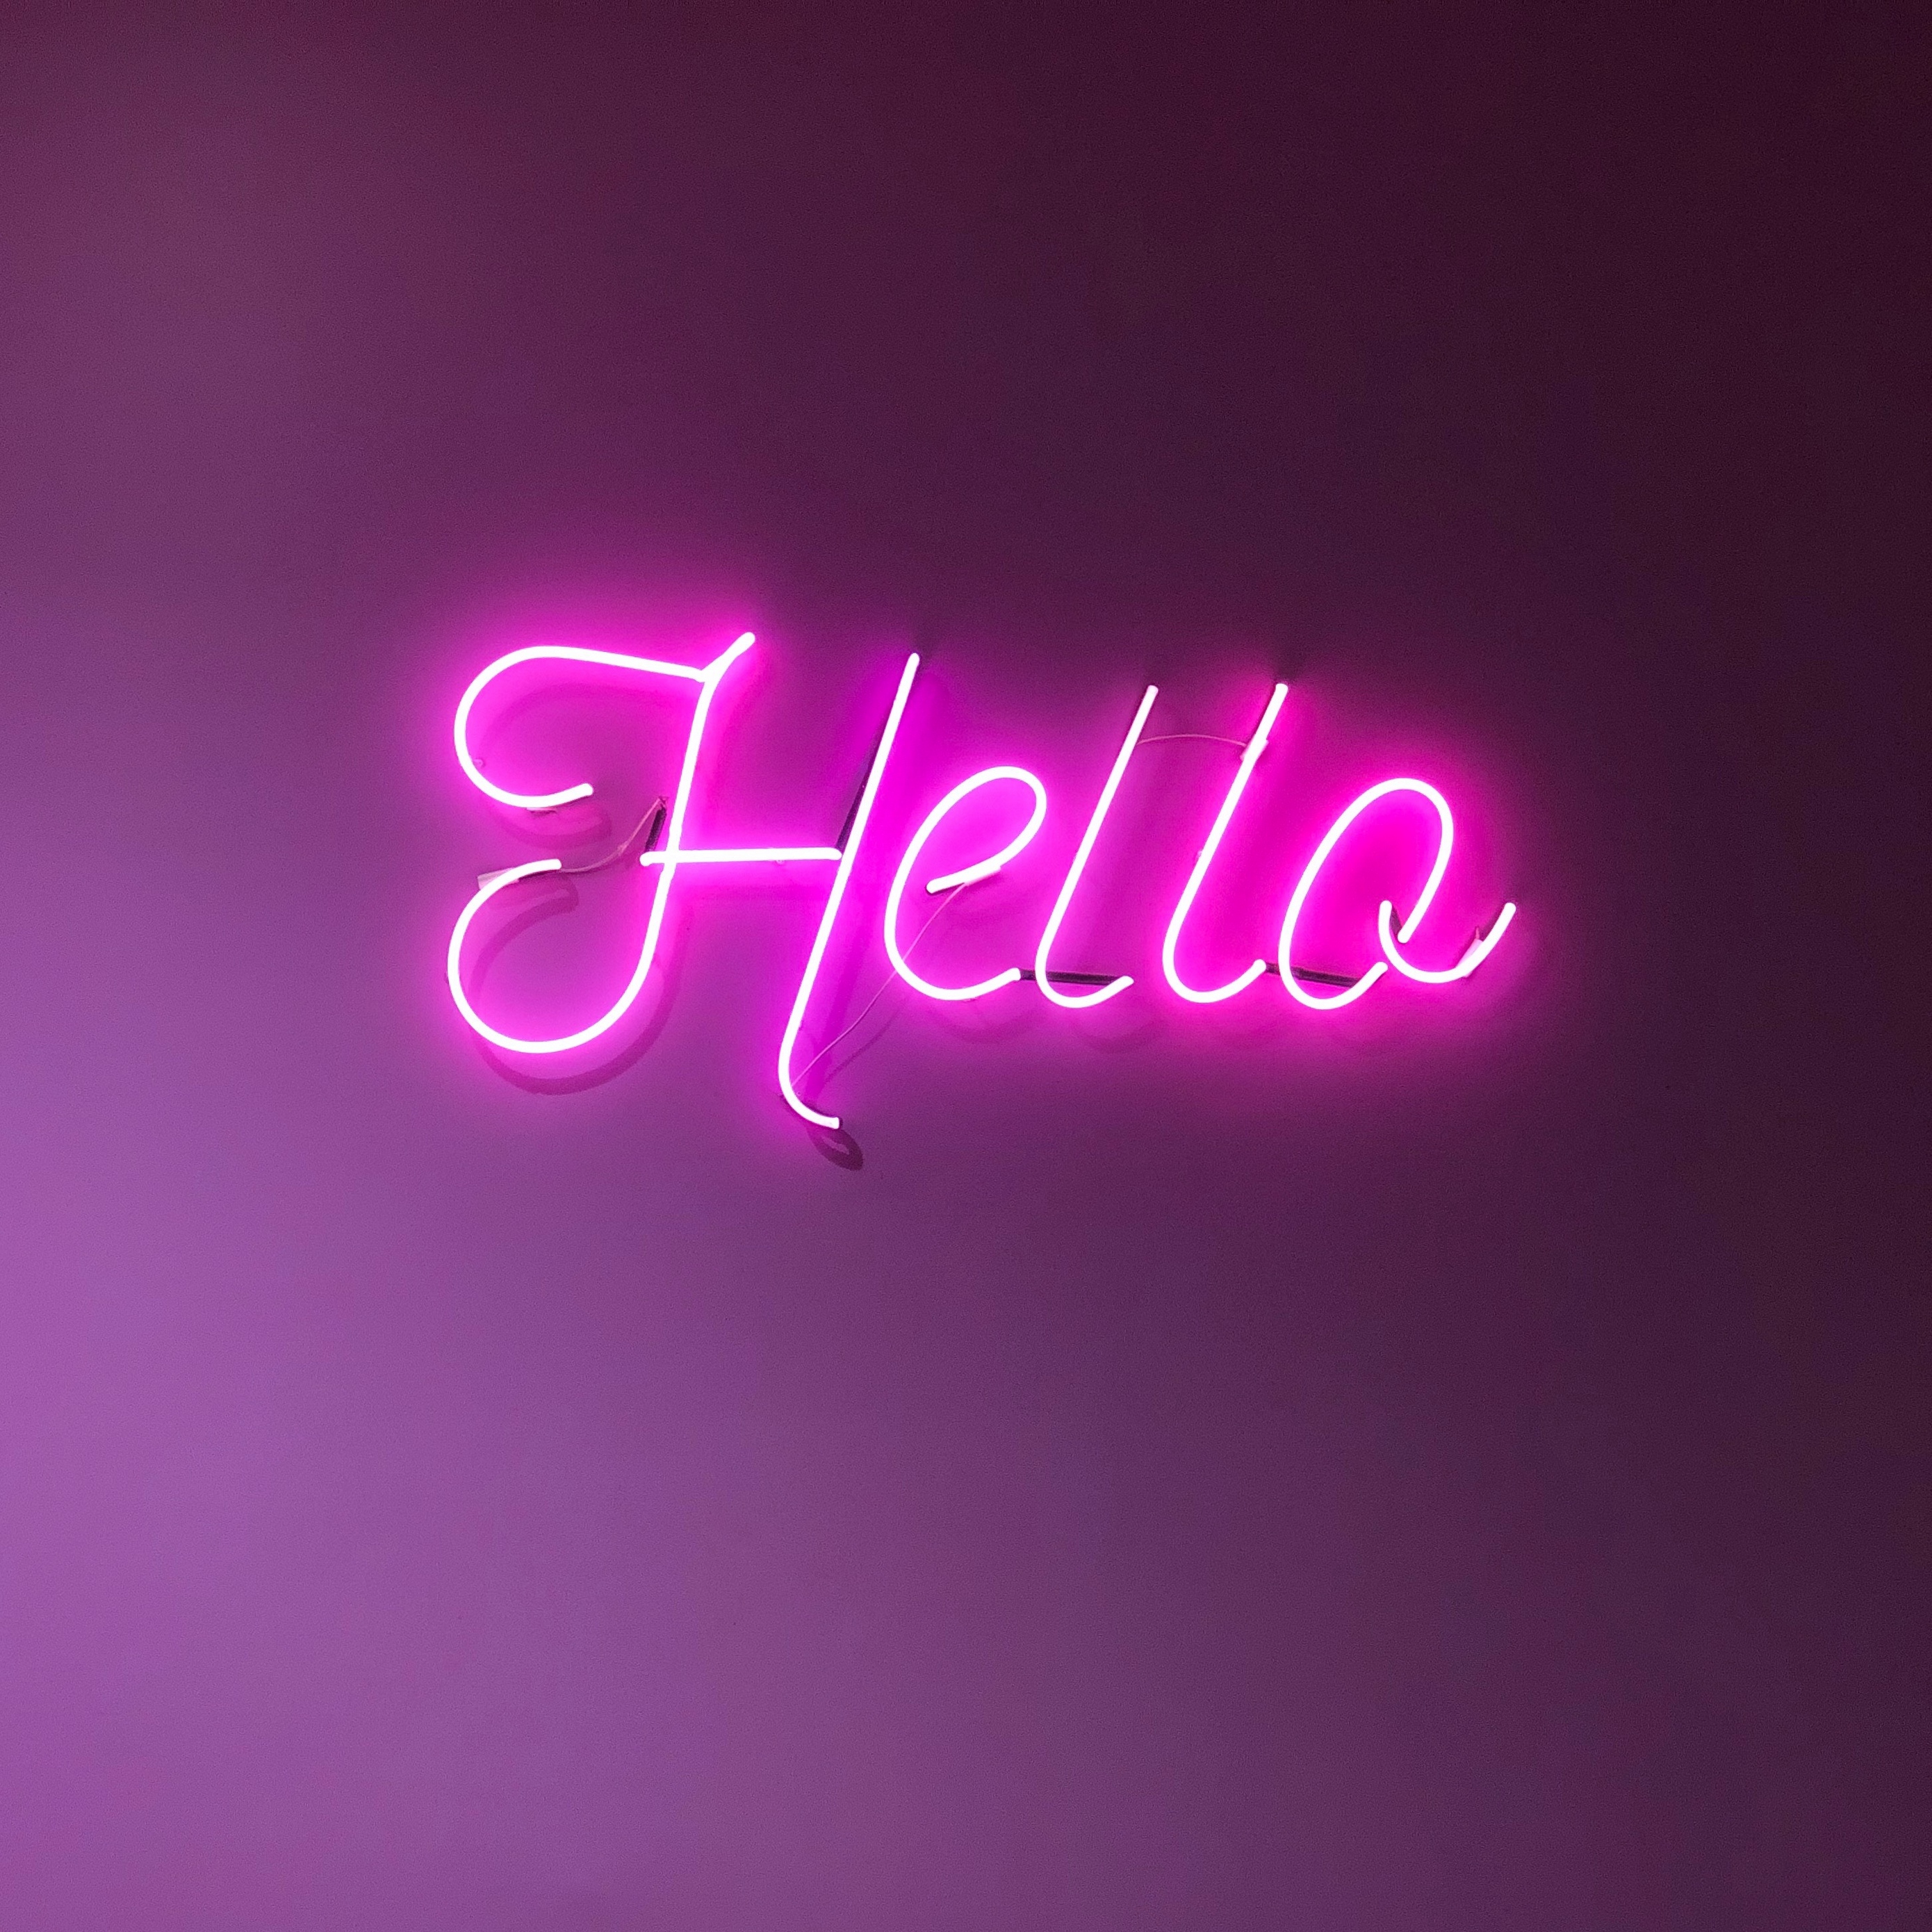 Wallpaper Hello, Inscription, Neon, Light, Electricity, - Hello Neon - HD Wallpaper 